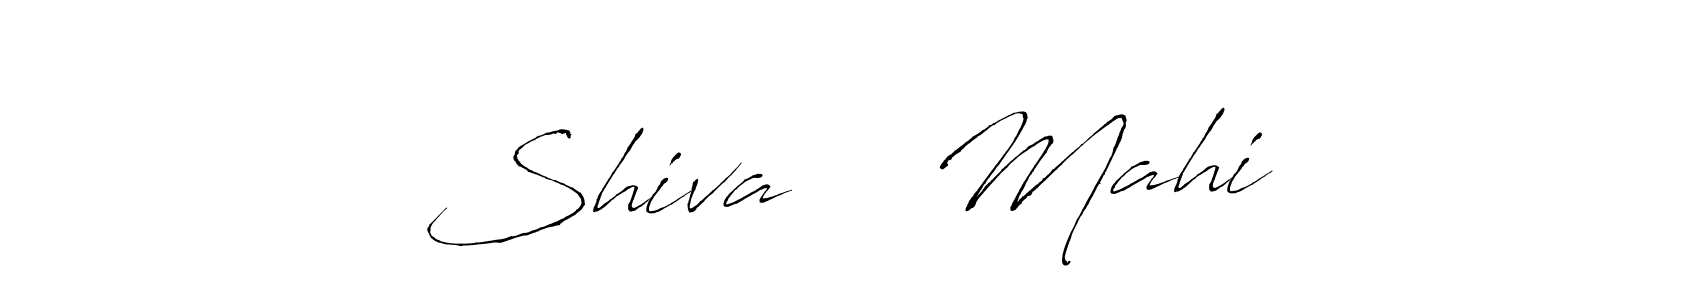 How to make Shiva ♥️ Mahi signature? Antro_Vectra is a professional autograph style. Create handwritten signature for Shiva ♥️ Mahi name. Shiva ♥️ Mahi signature style 6 images and pictures png